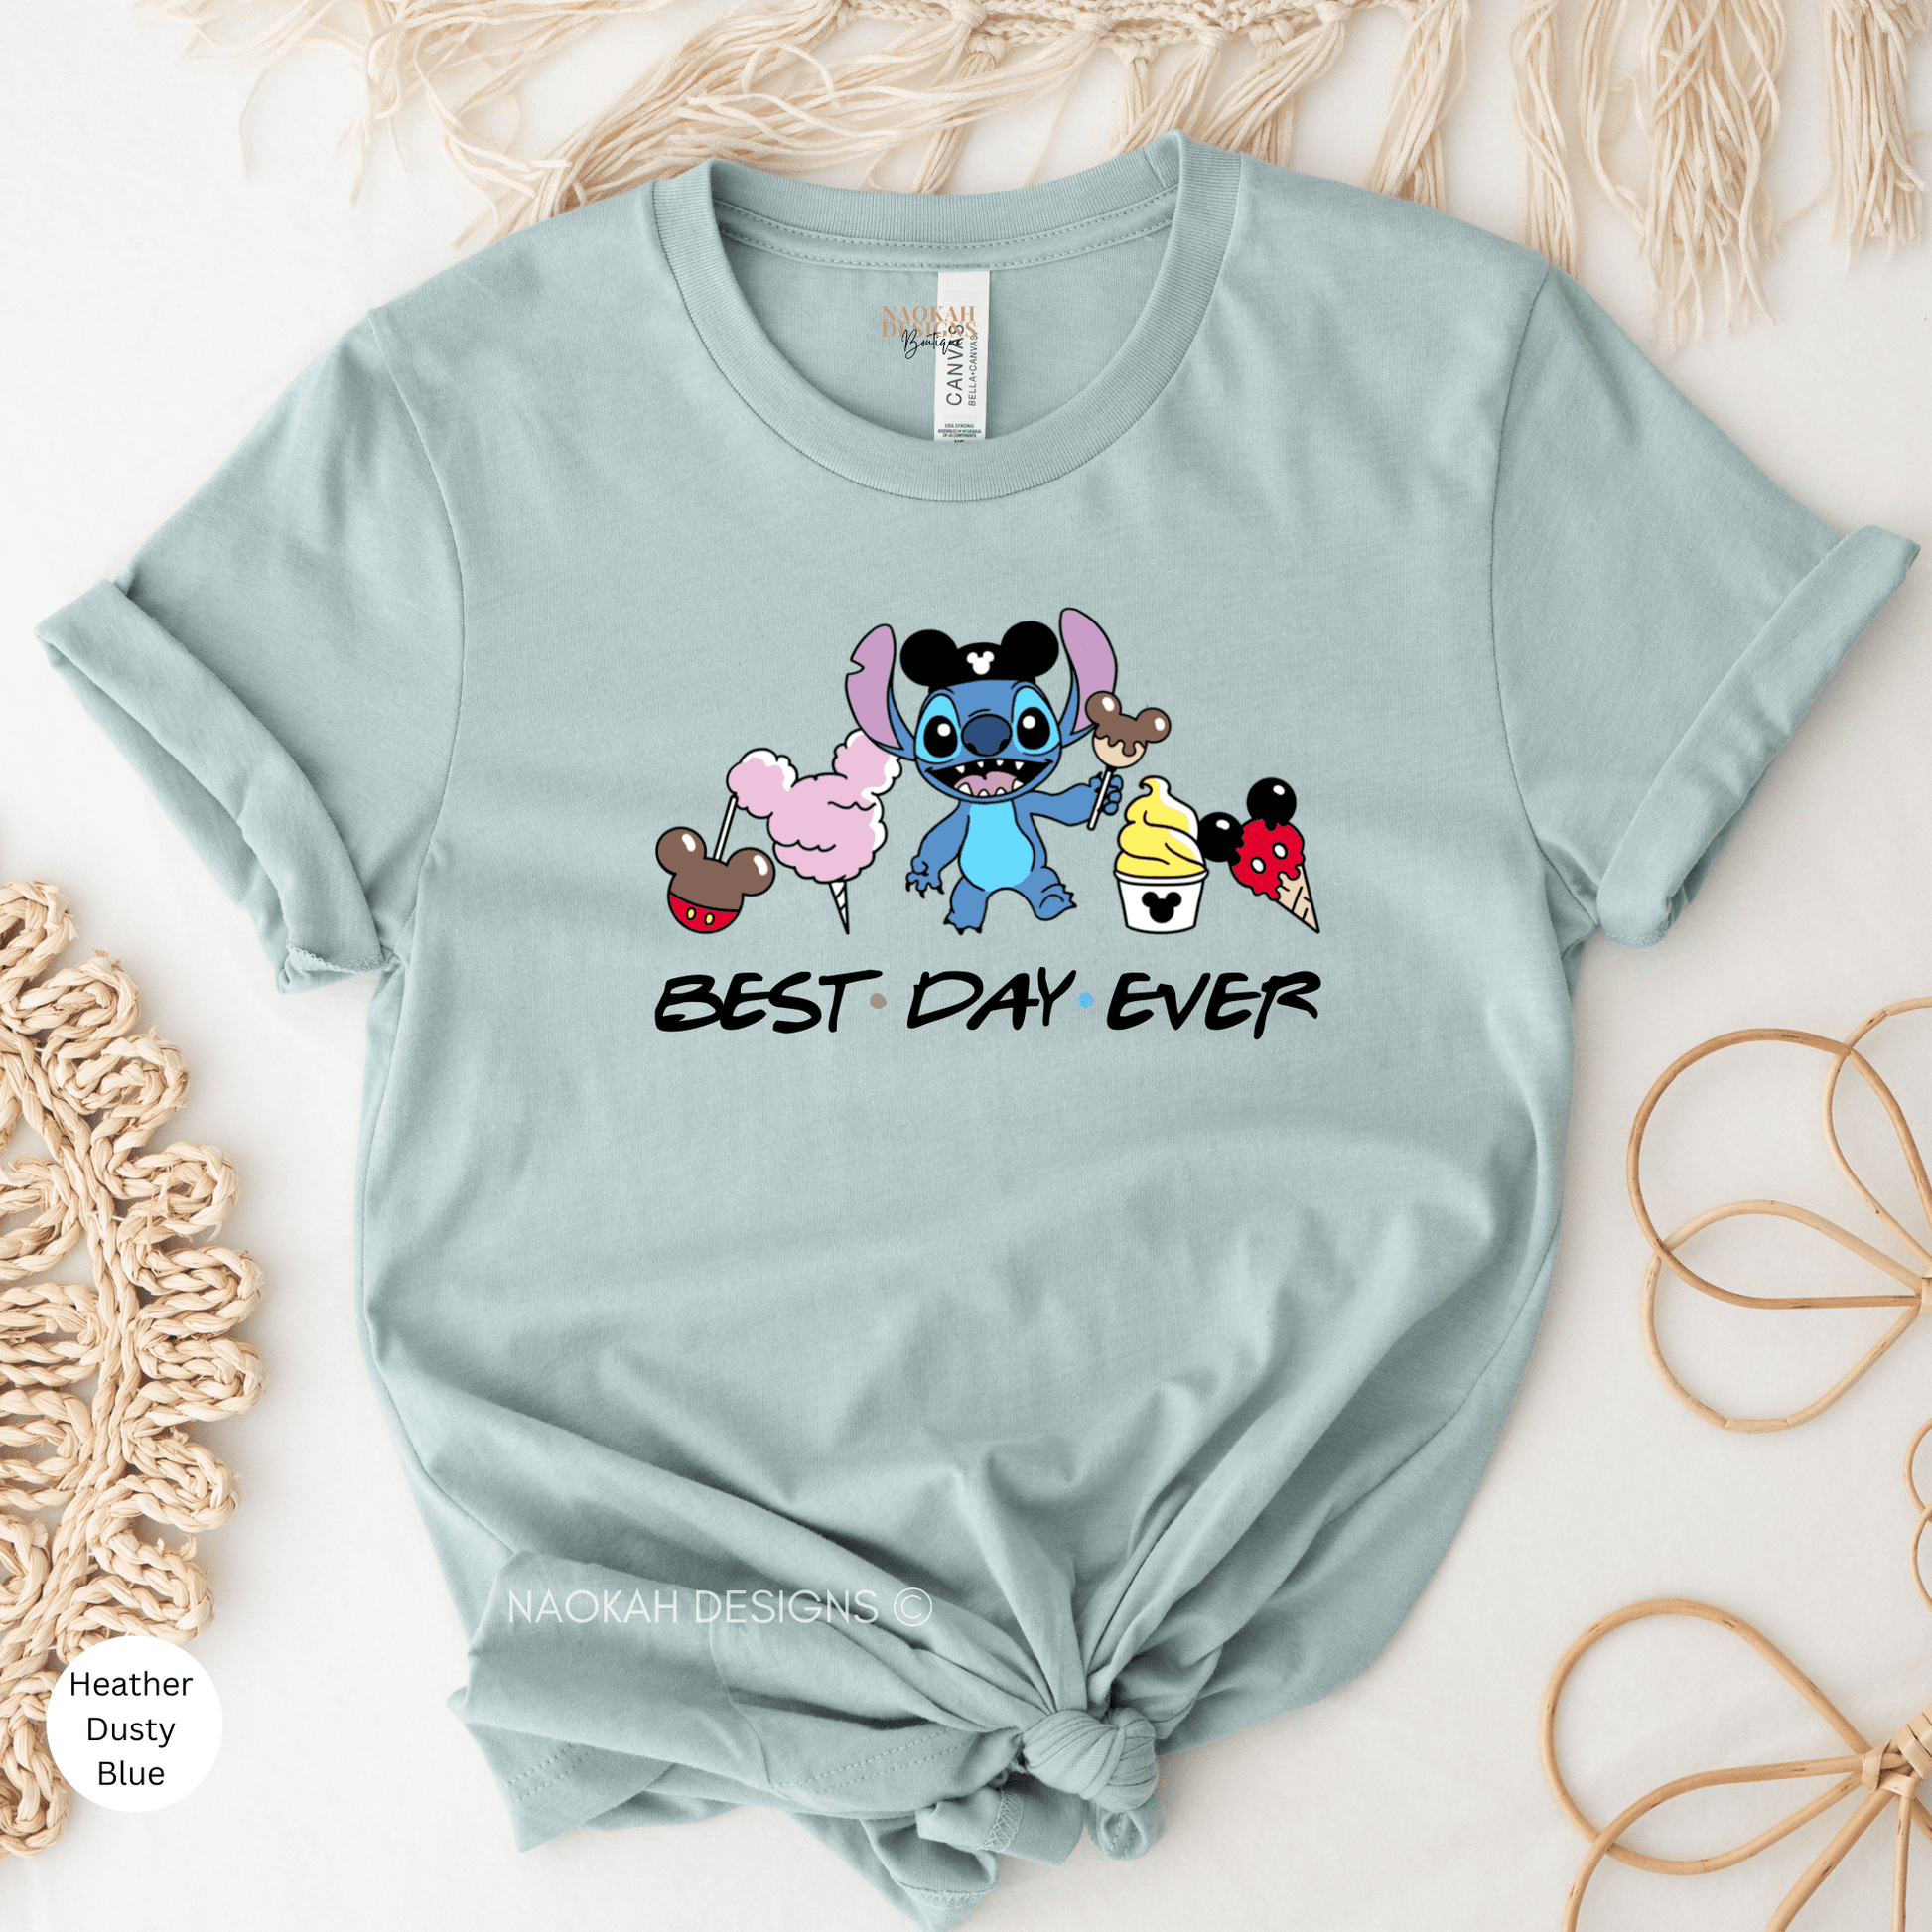 Best Day Ever Stitch Shirt, Stitch Snacks Shirt, Here For The Snacks Shirt, Best Day Ever Shirt, Mickey Ears Shirt, Aloha Stitch Shirt